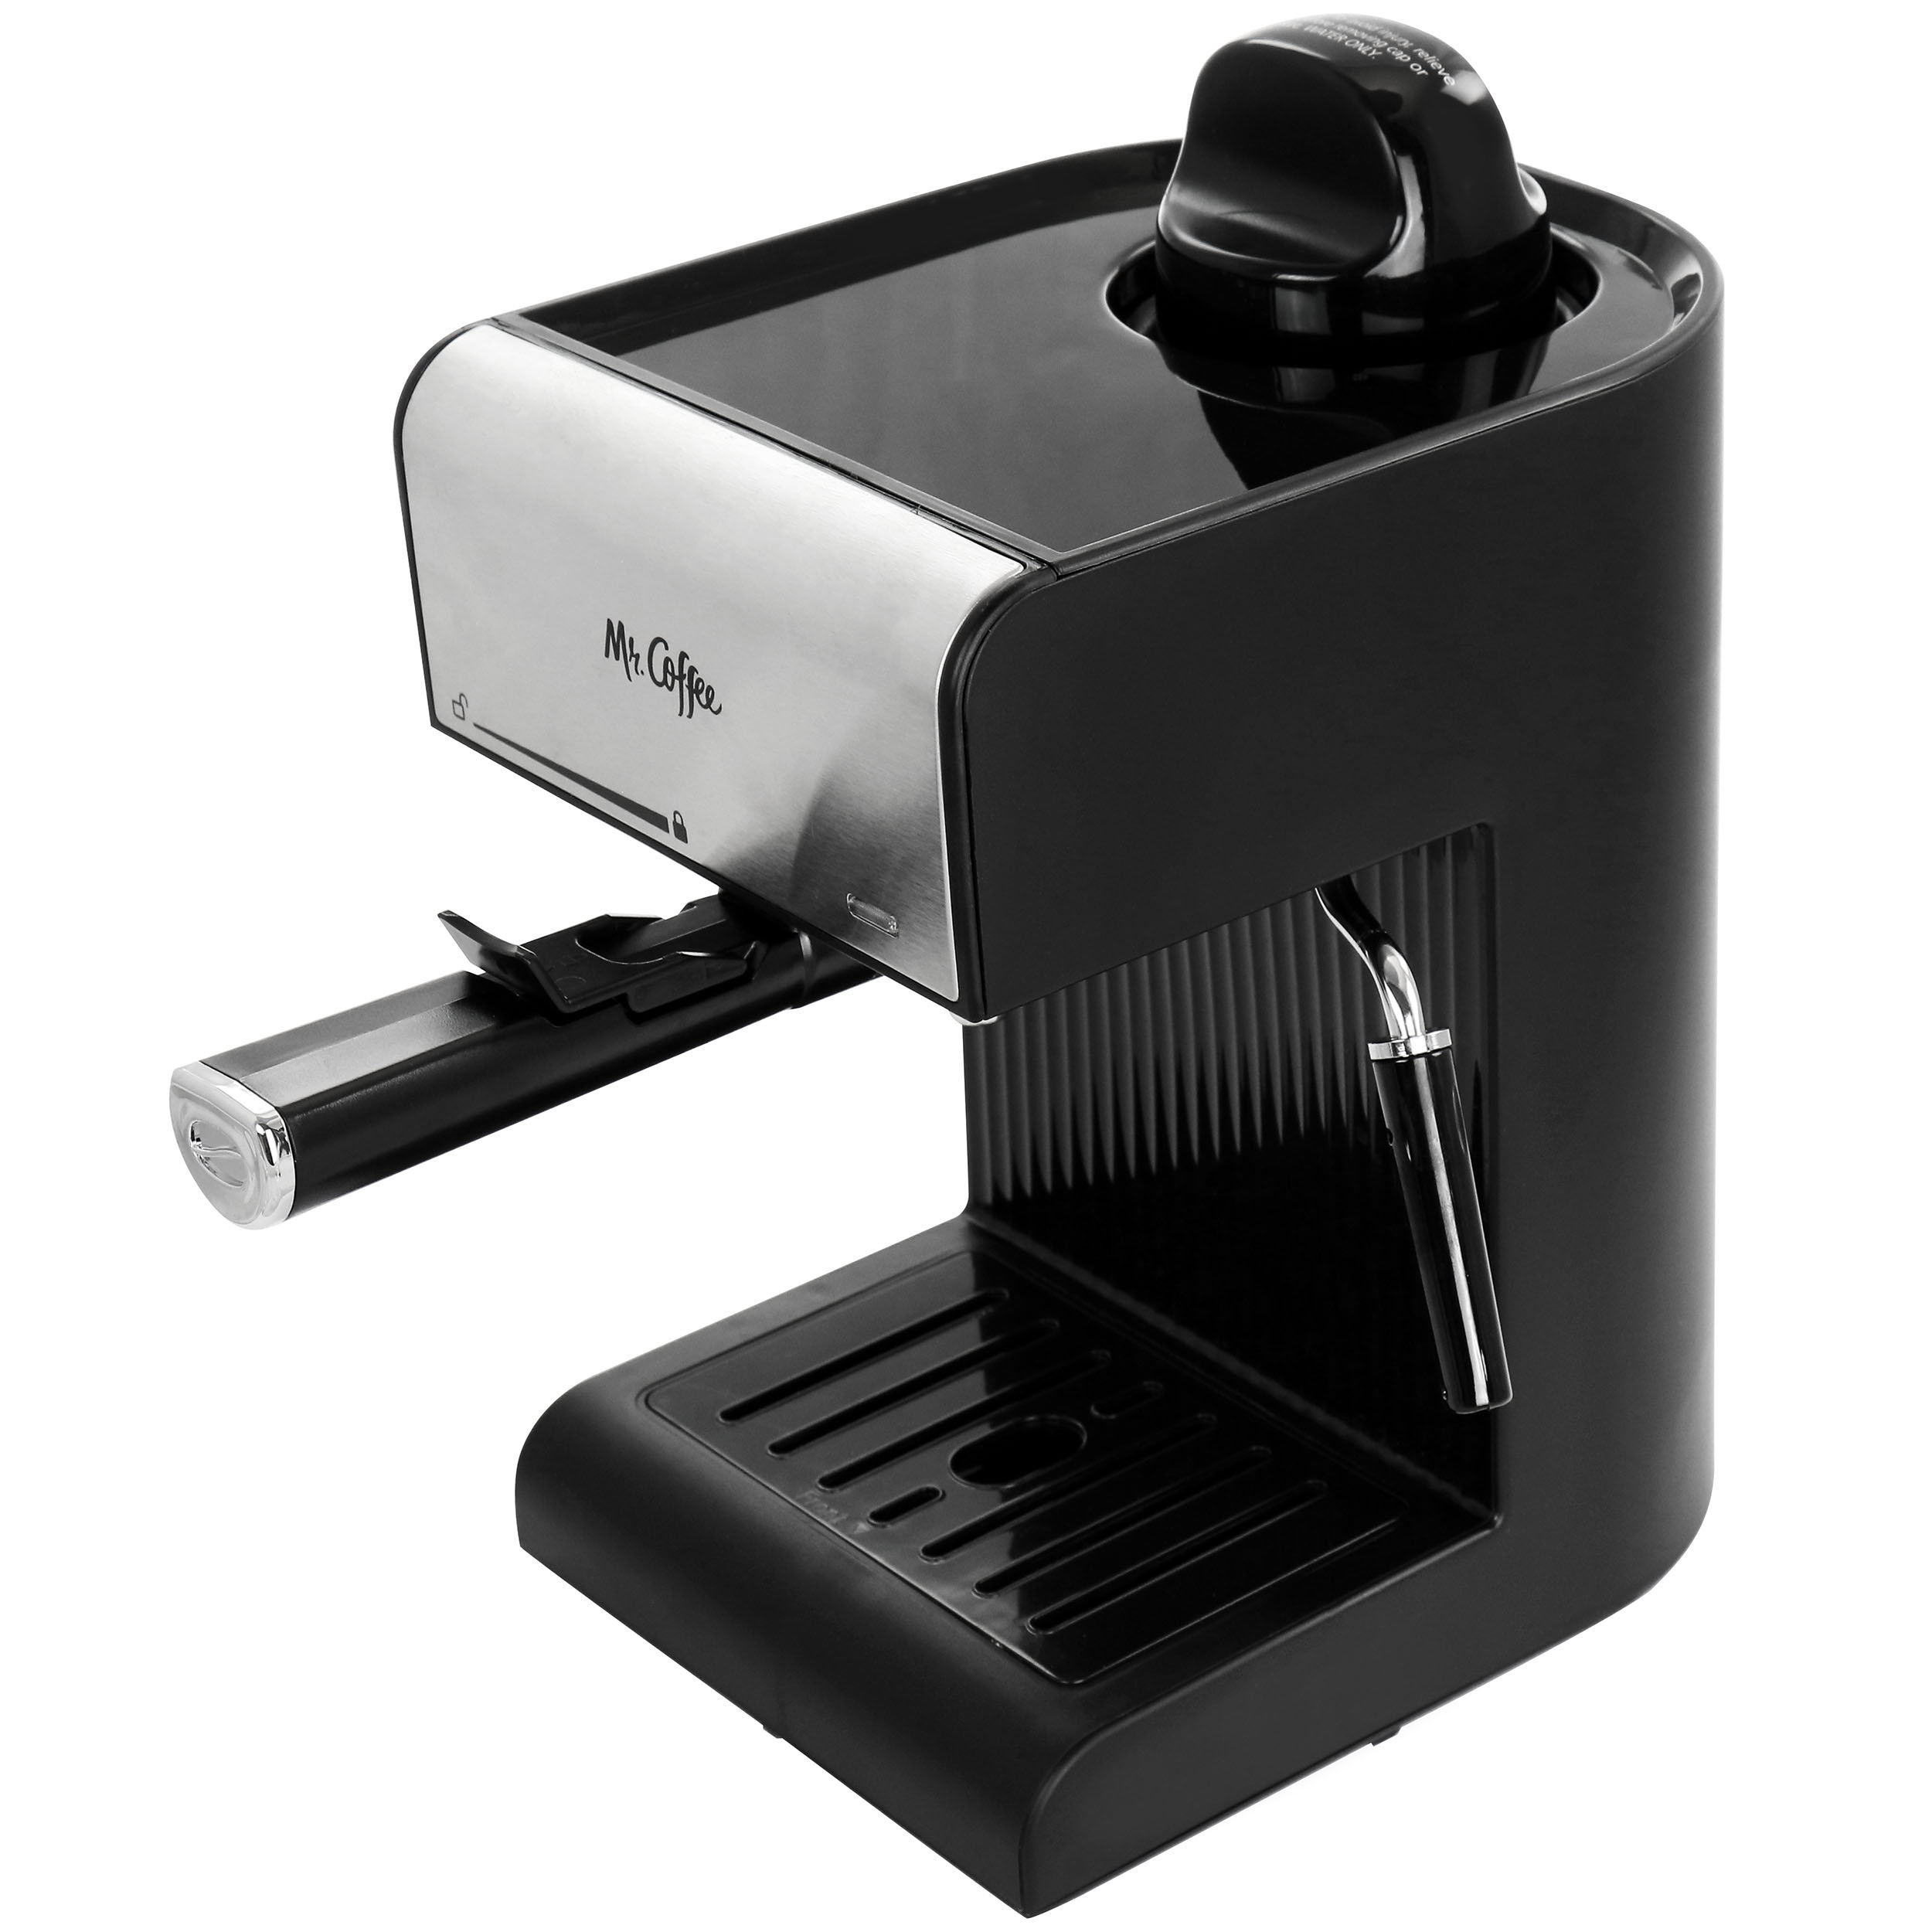 Mr. Coffee Espresso Machine - appliances - by owner - sale - craigslist